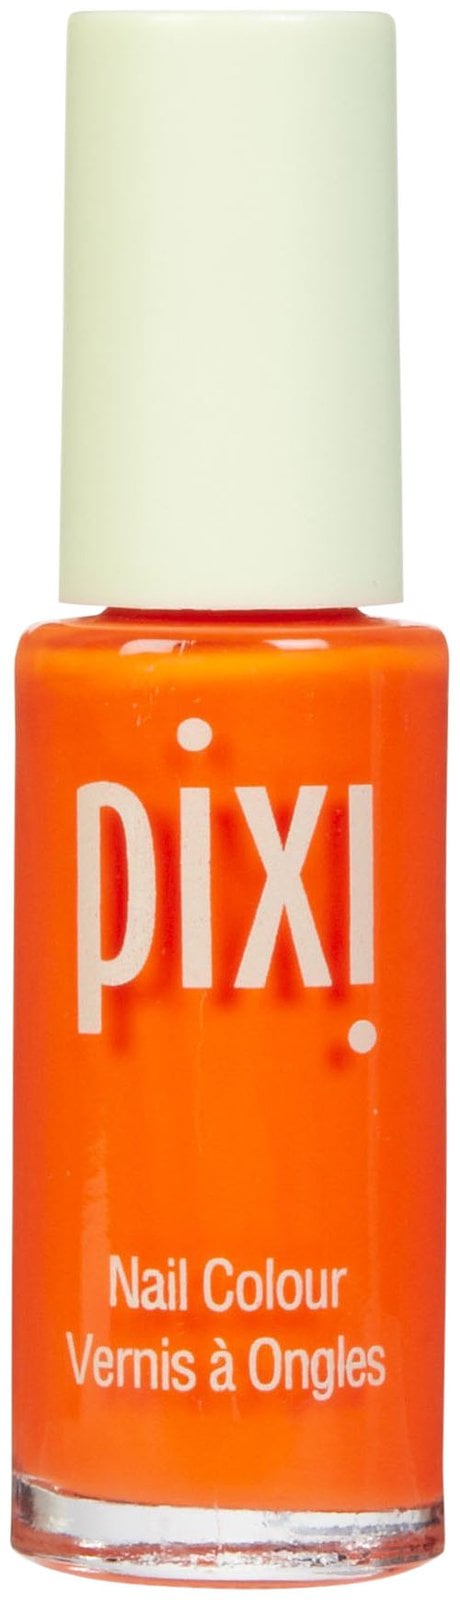 Pixi Beauty Nail Polish